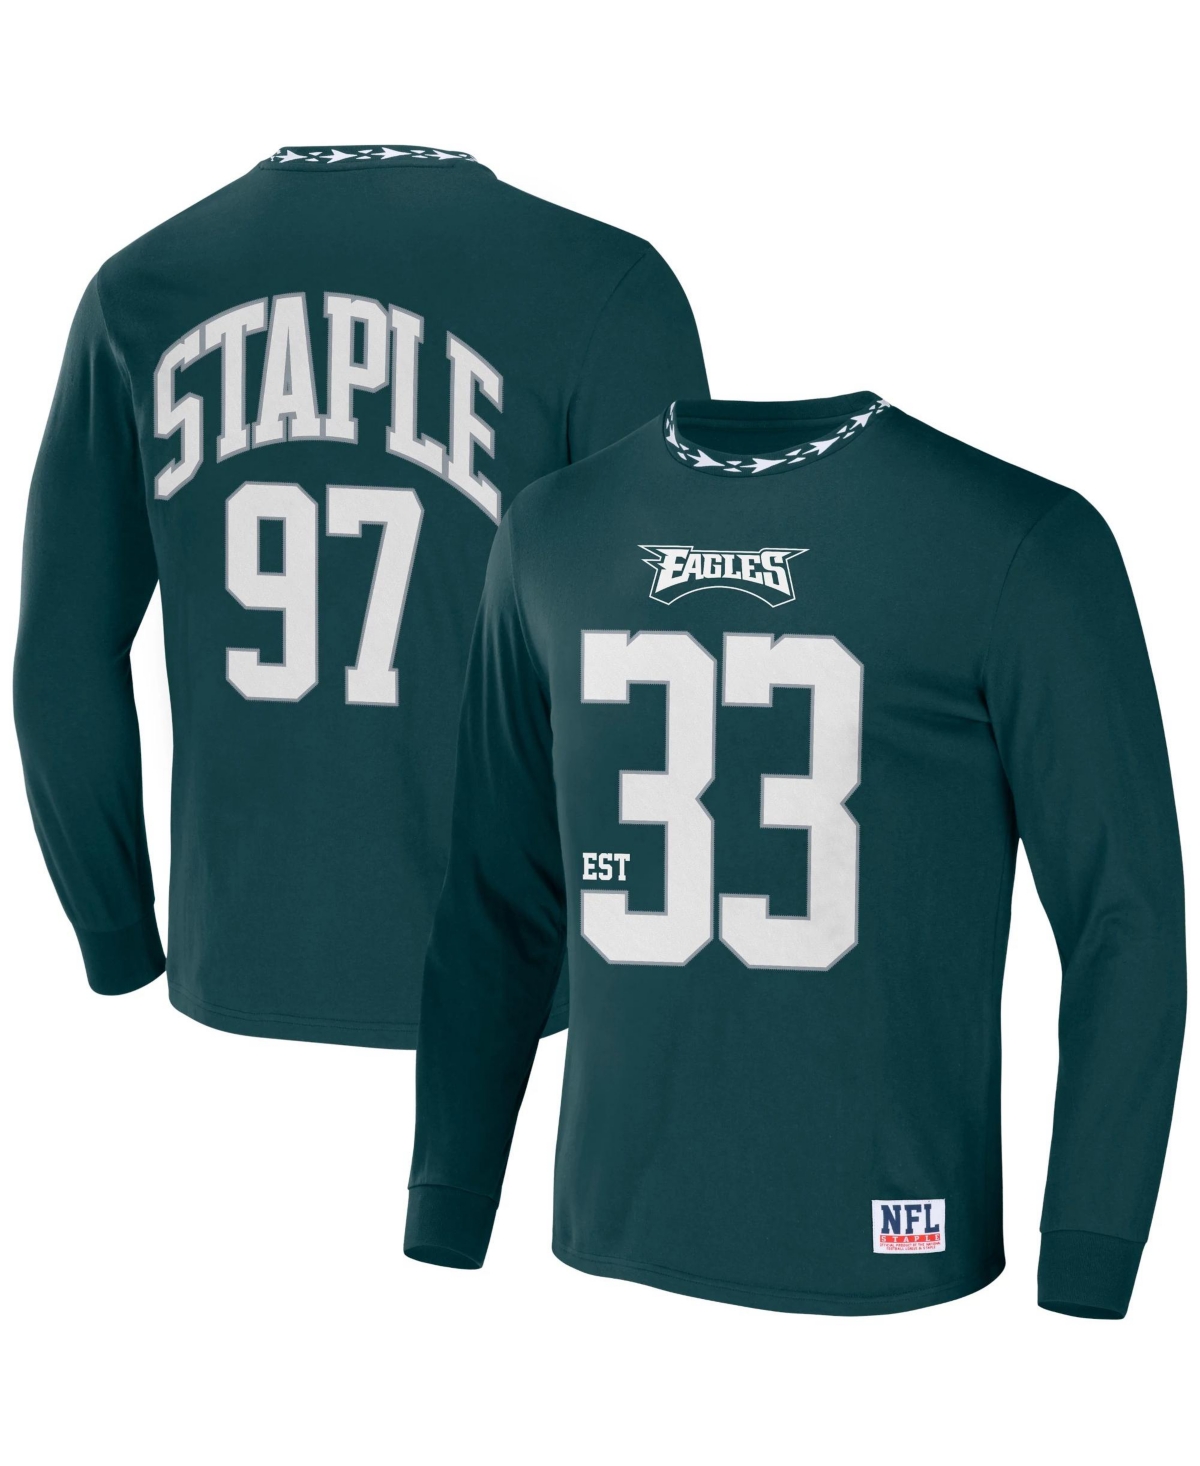 Men's Nfl X Staple Green Philadelphia Eagles Core Long Sleeve Jersey Style T-shirt - Green